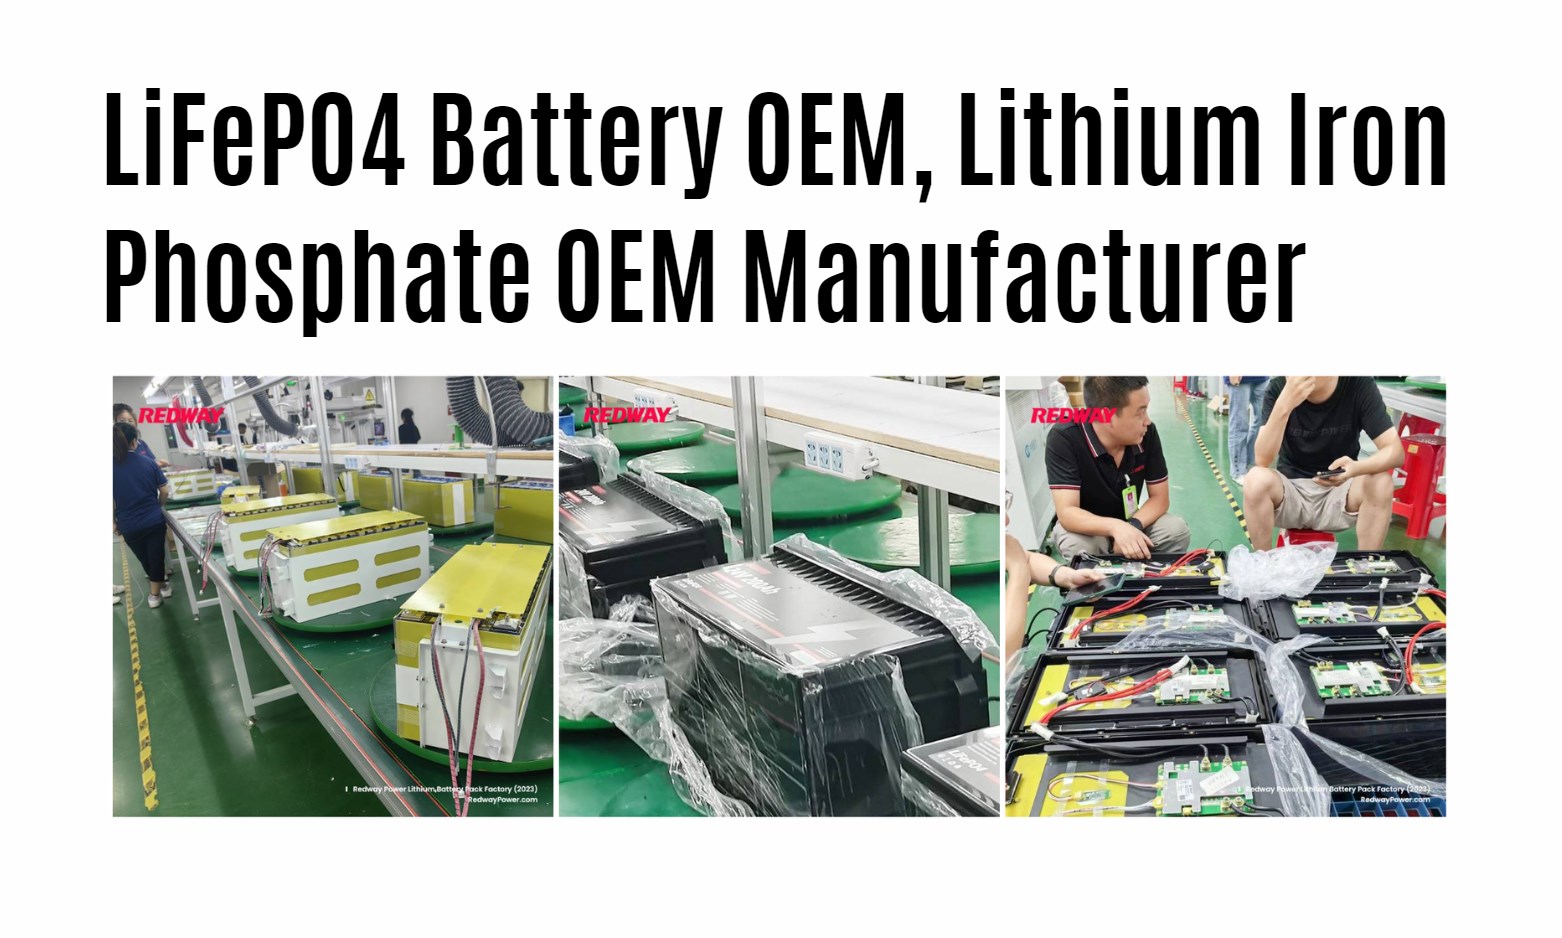 LiFePO4 Battery OEM, Lithium Iron Phosphate OEM Manufacturer. 24v 200ah lithium battery factory lifepo4 oem